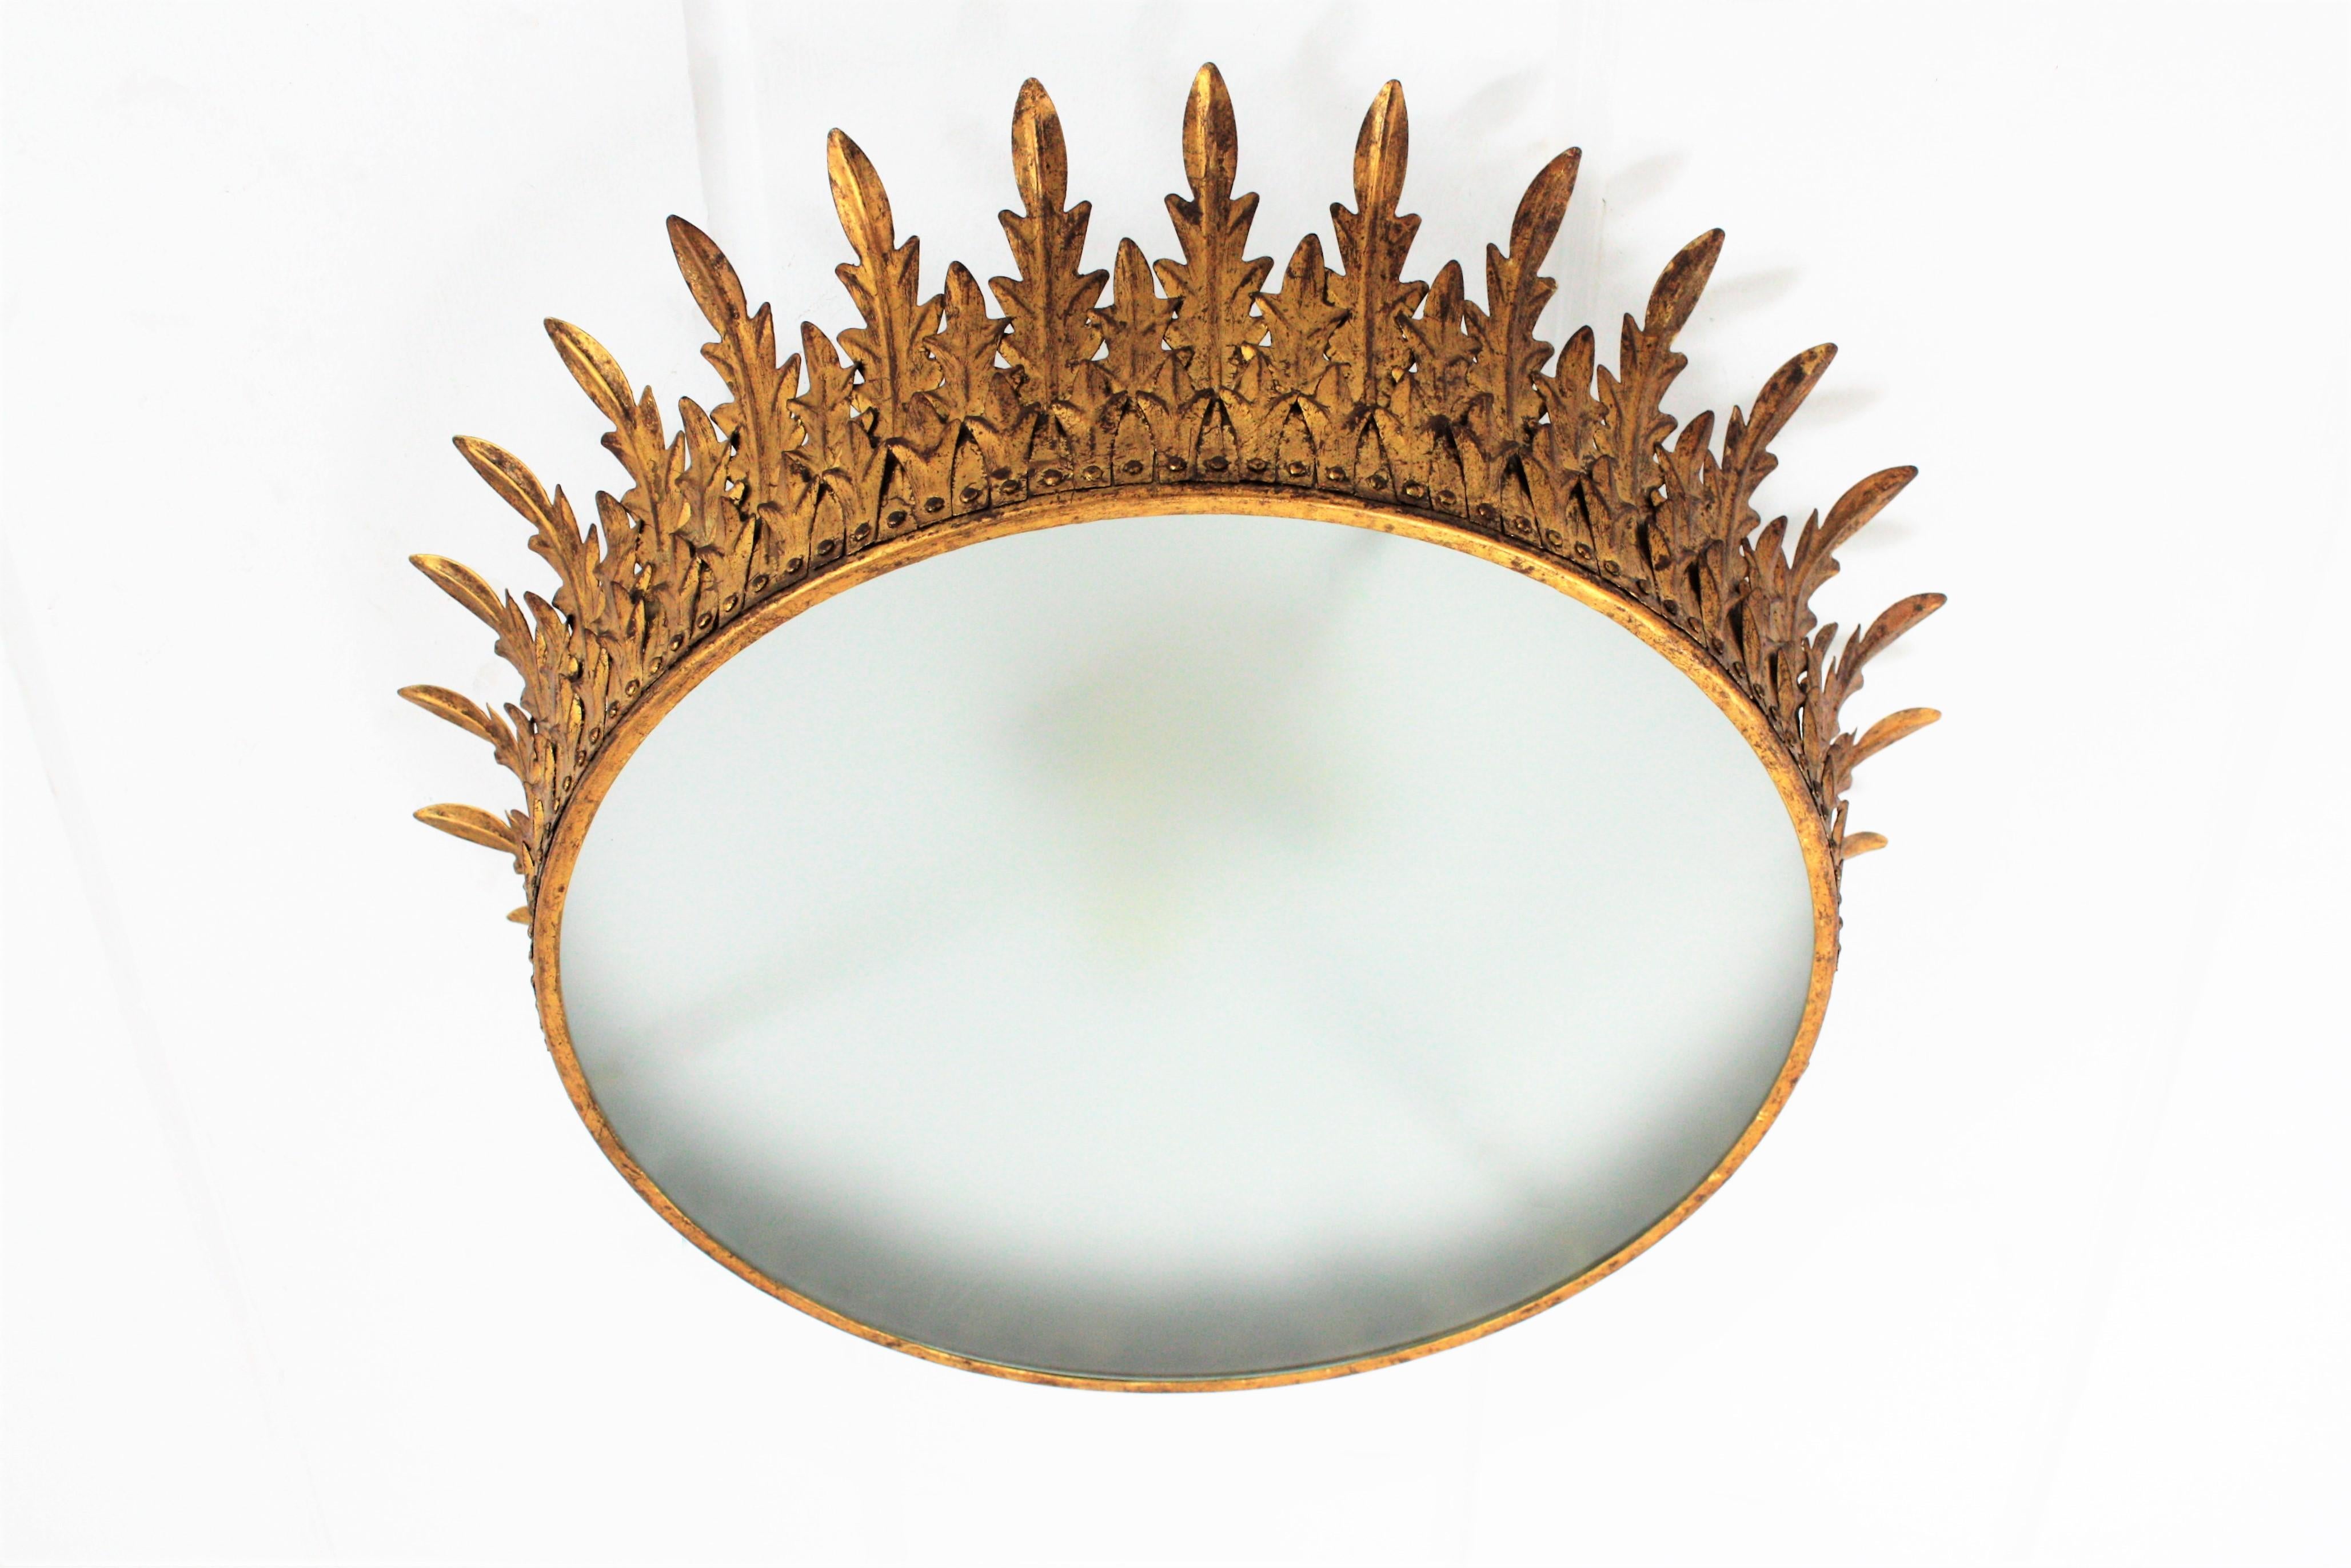 20th Century Spanish Extra Large Neoclassical Gilt Iron Sunburst Crown Ceiling Light Fixture